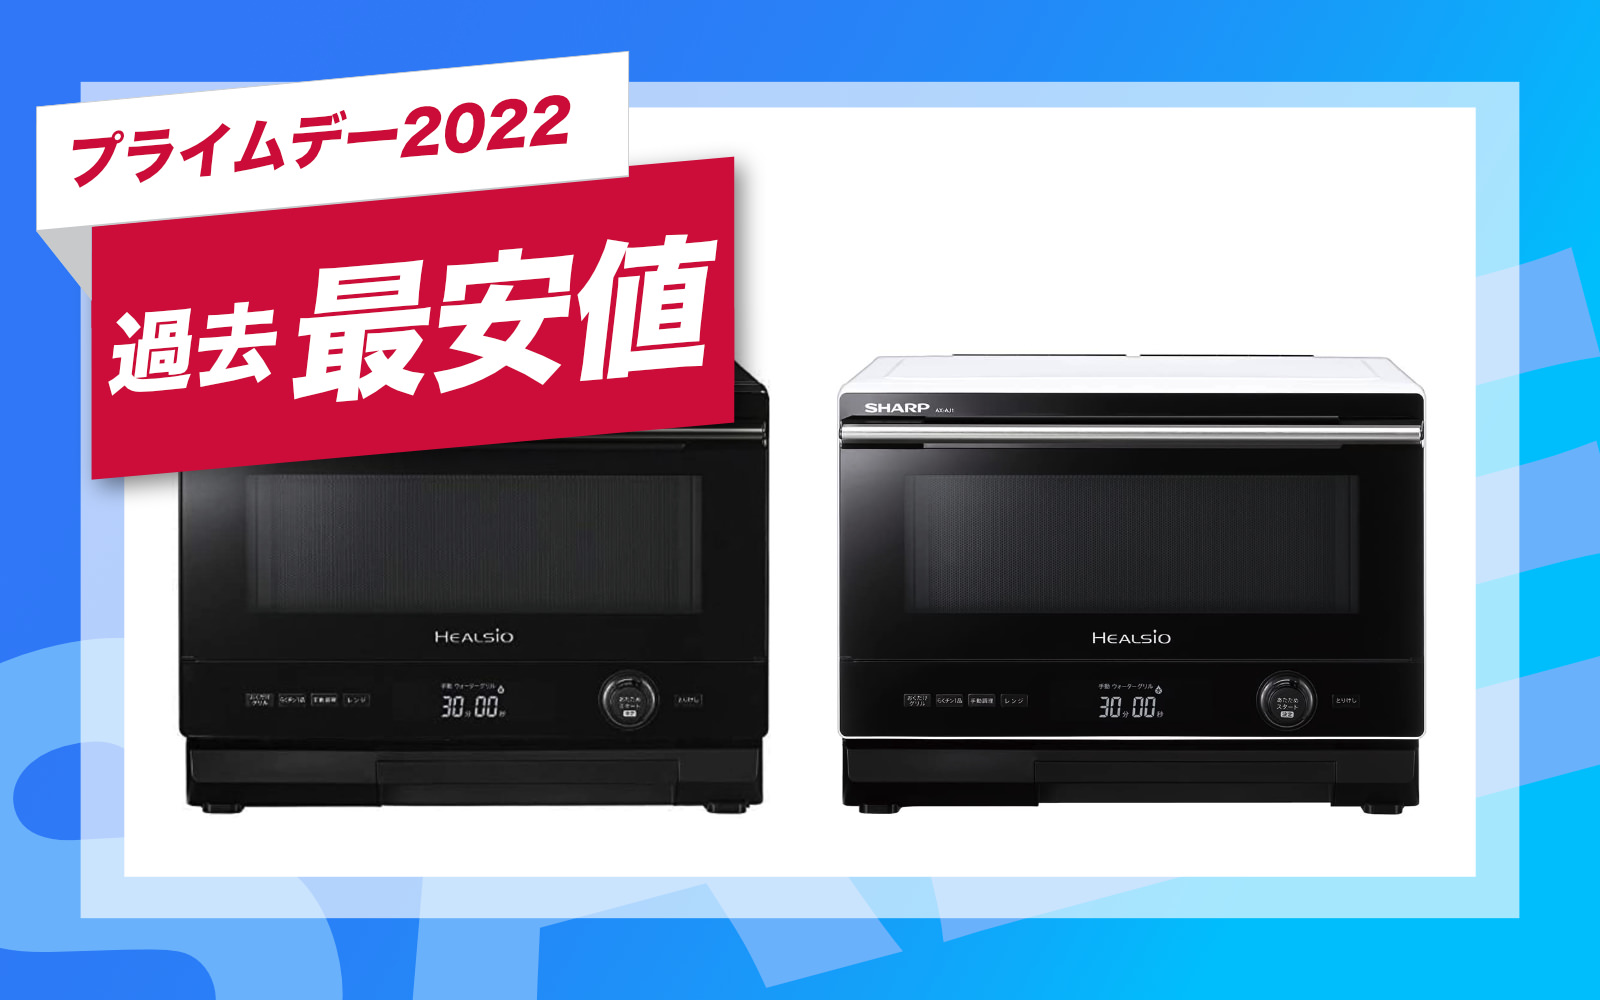 AmazonPrimeDay2022 Sale Item Helsio Oven Microwave